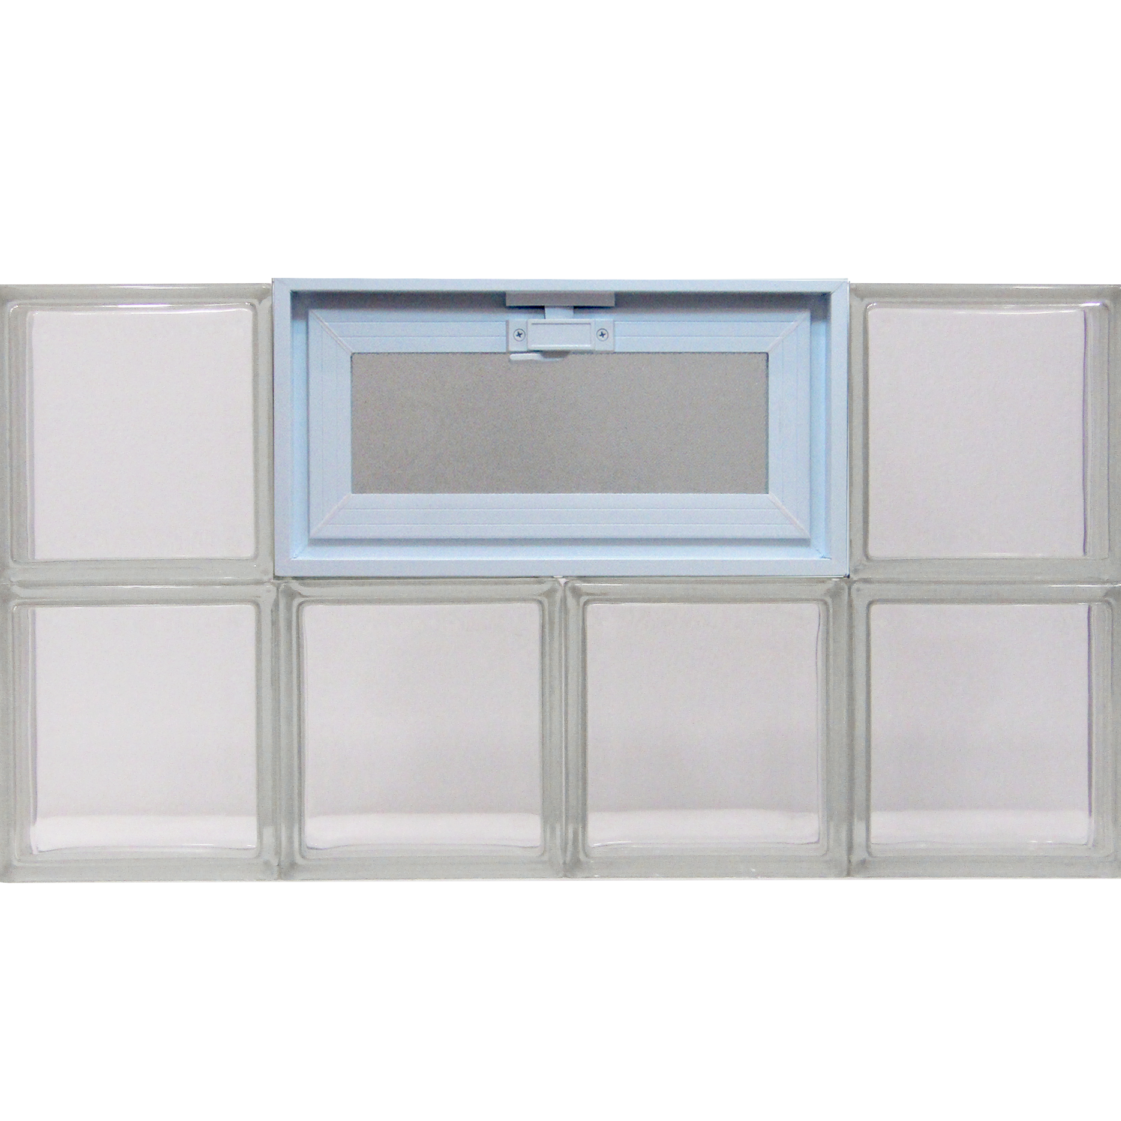 panels of glass blocks